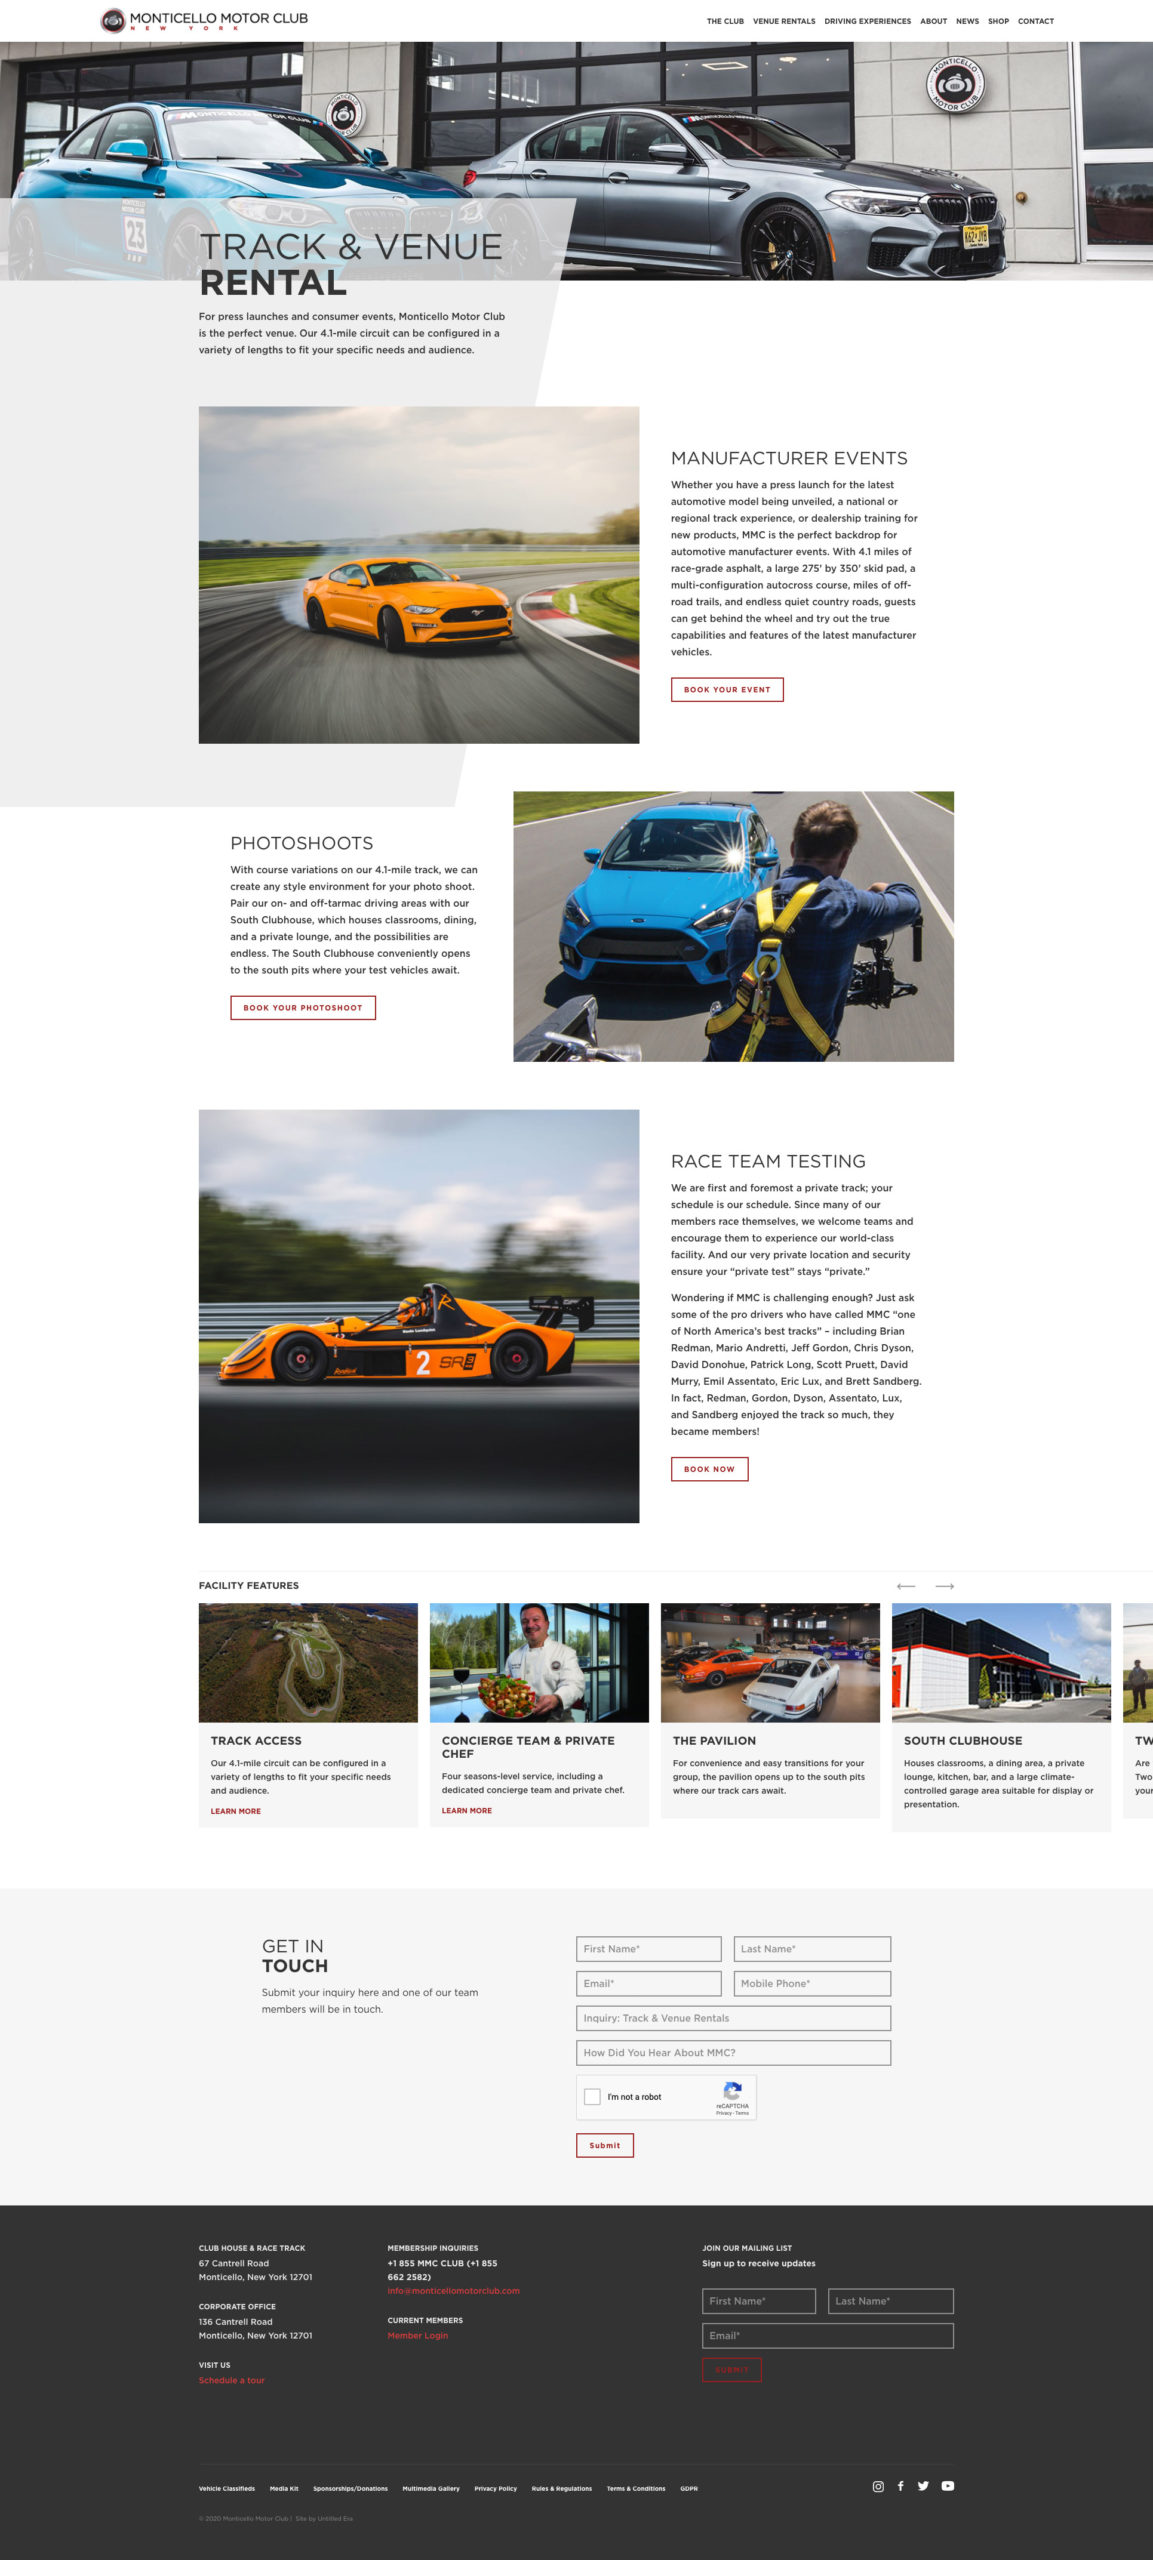 A screenshot of the MMC website Track & Venue Rental page for desktop